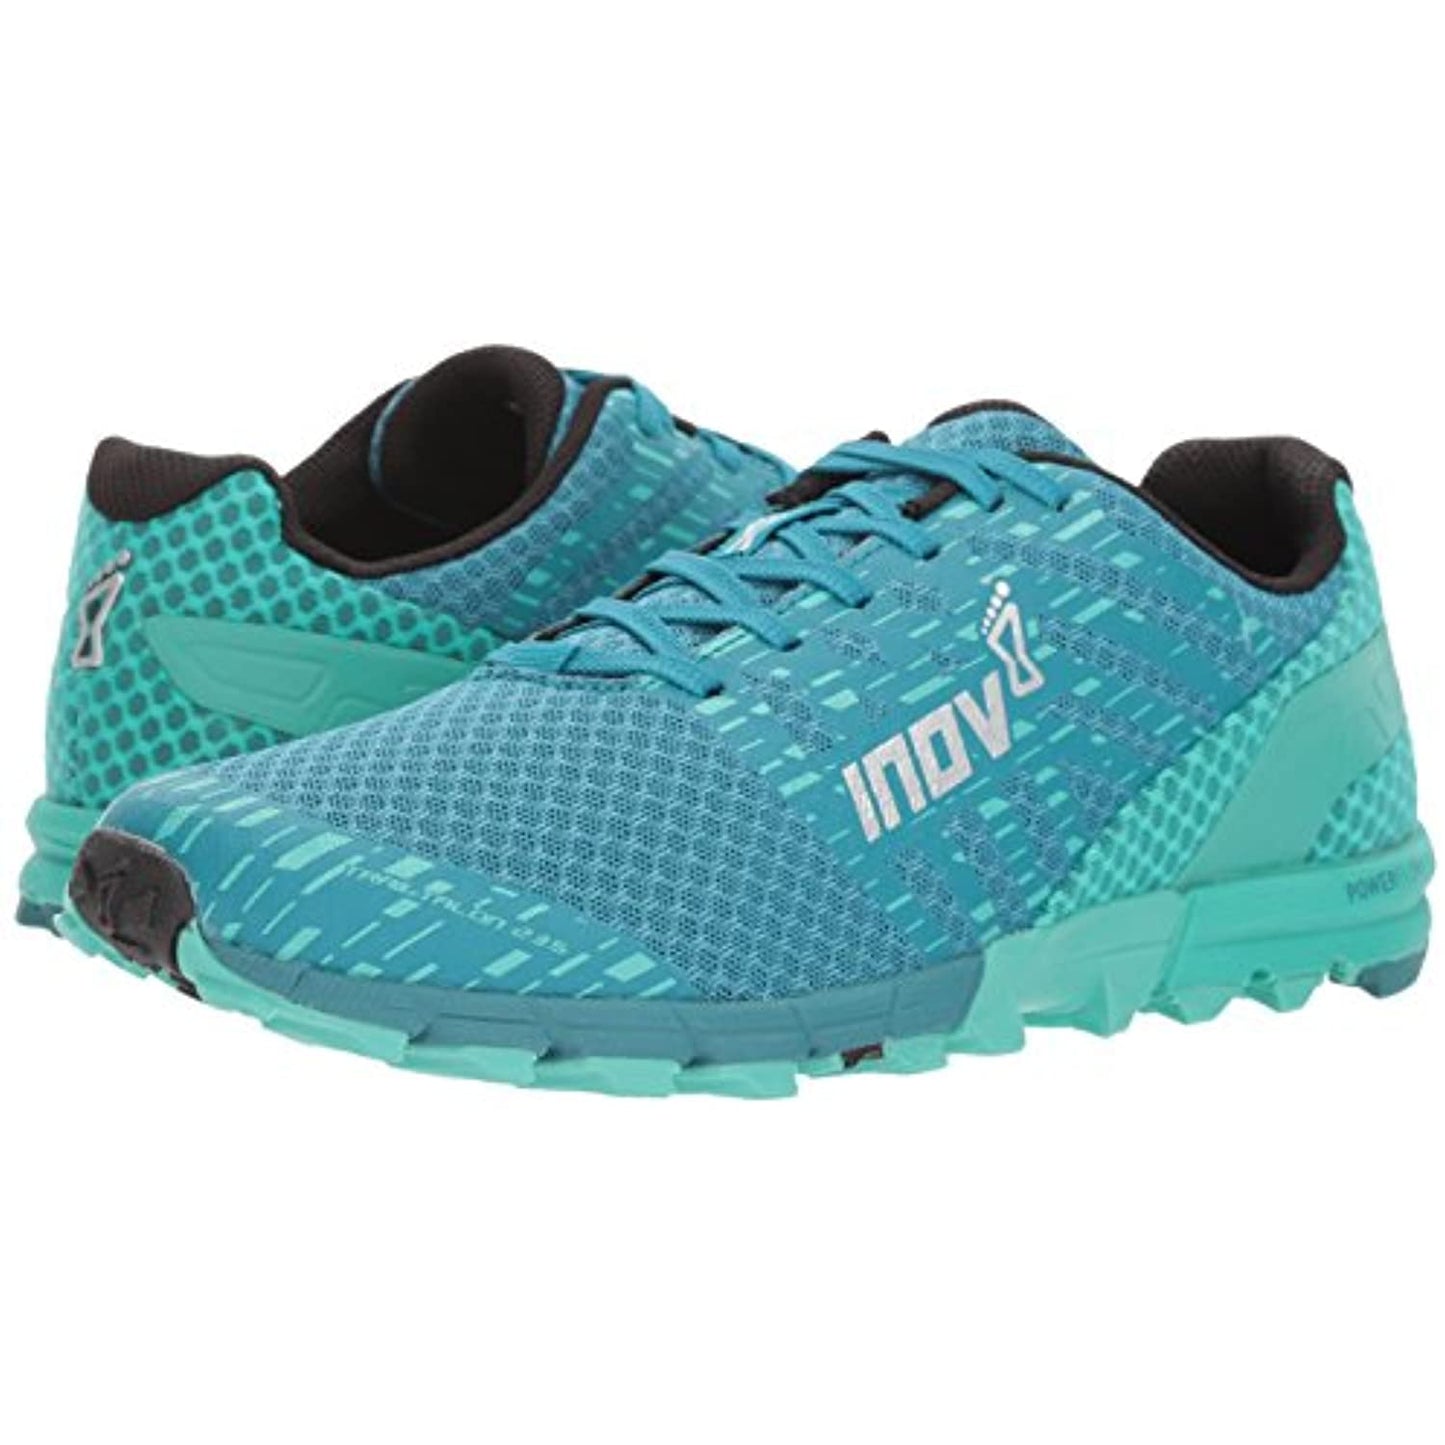 Inov-8 Men's Trailtalon 235 (W) Trail Running Shoe, Teal